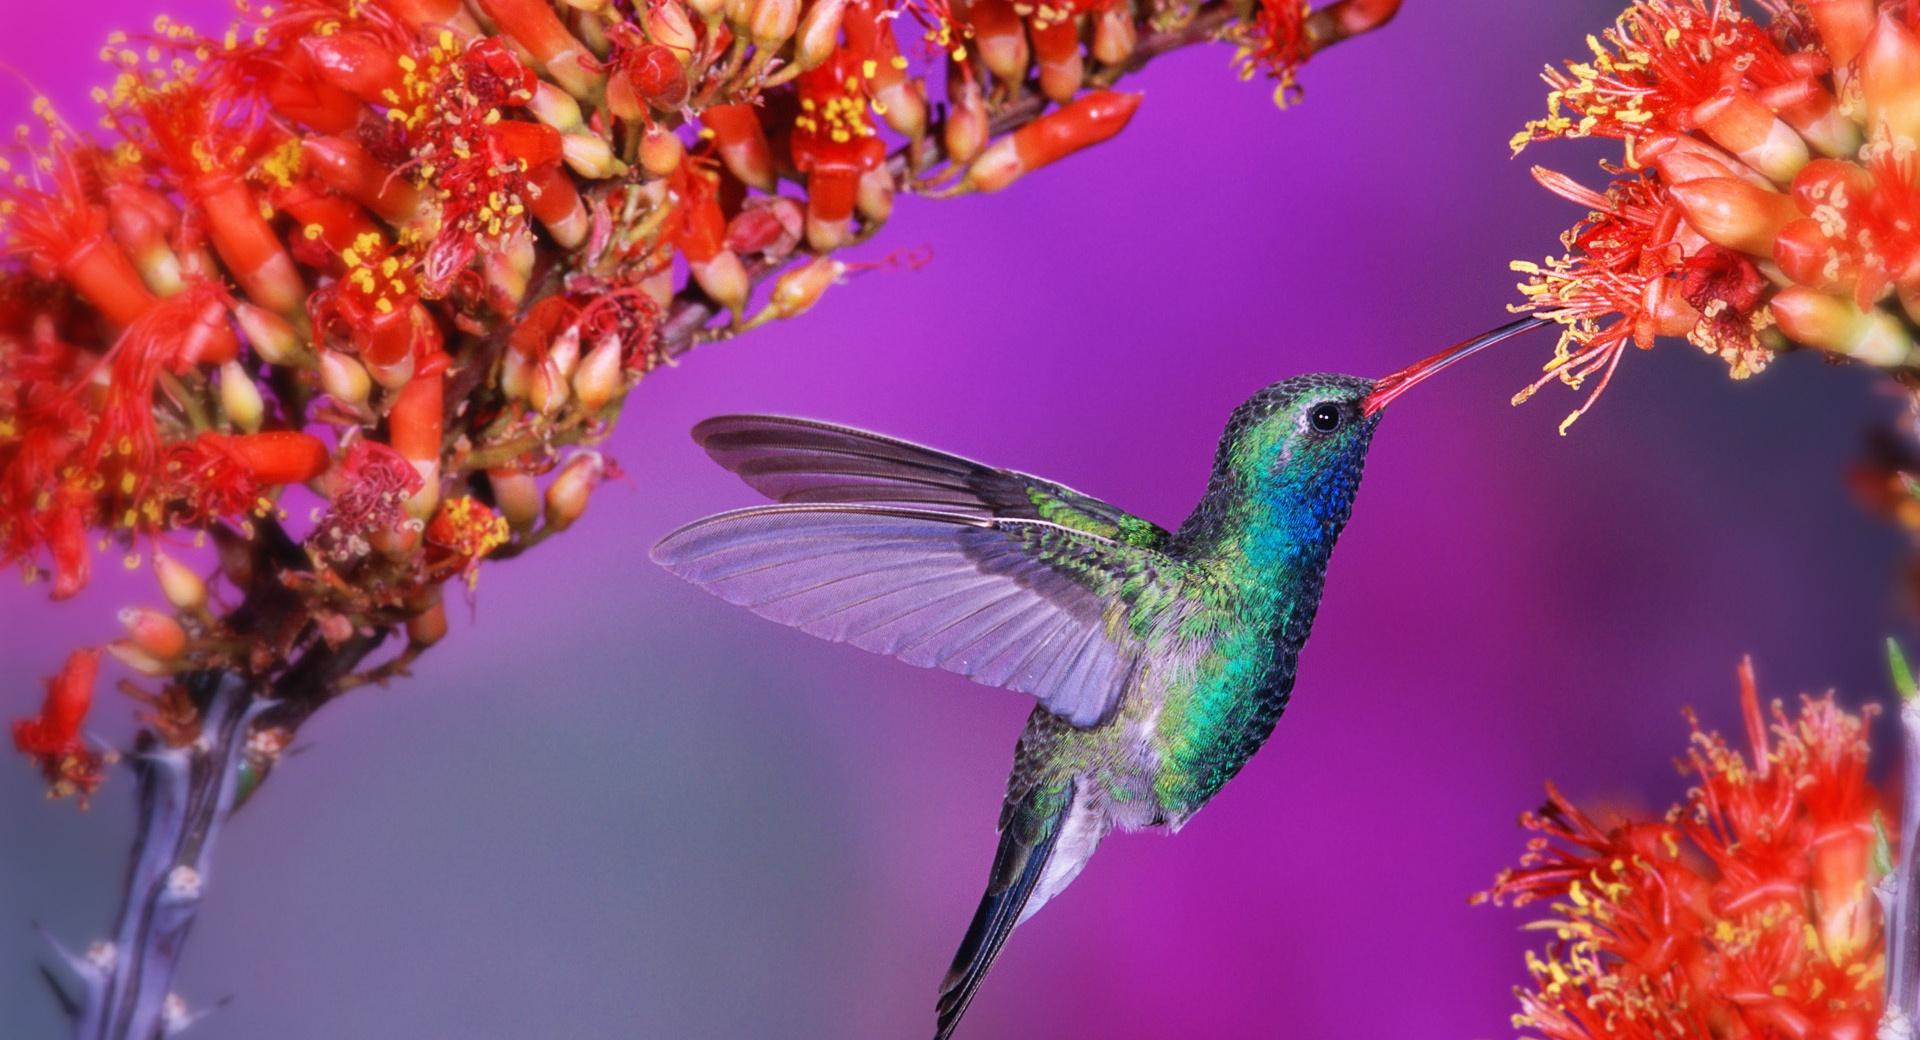 Beautiful Hummingbird at 1024 x 768 size wallpapers HD quality